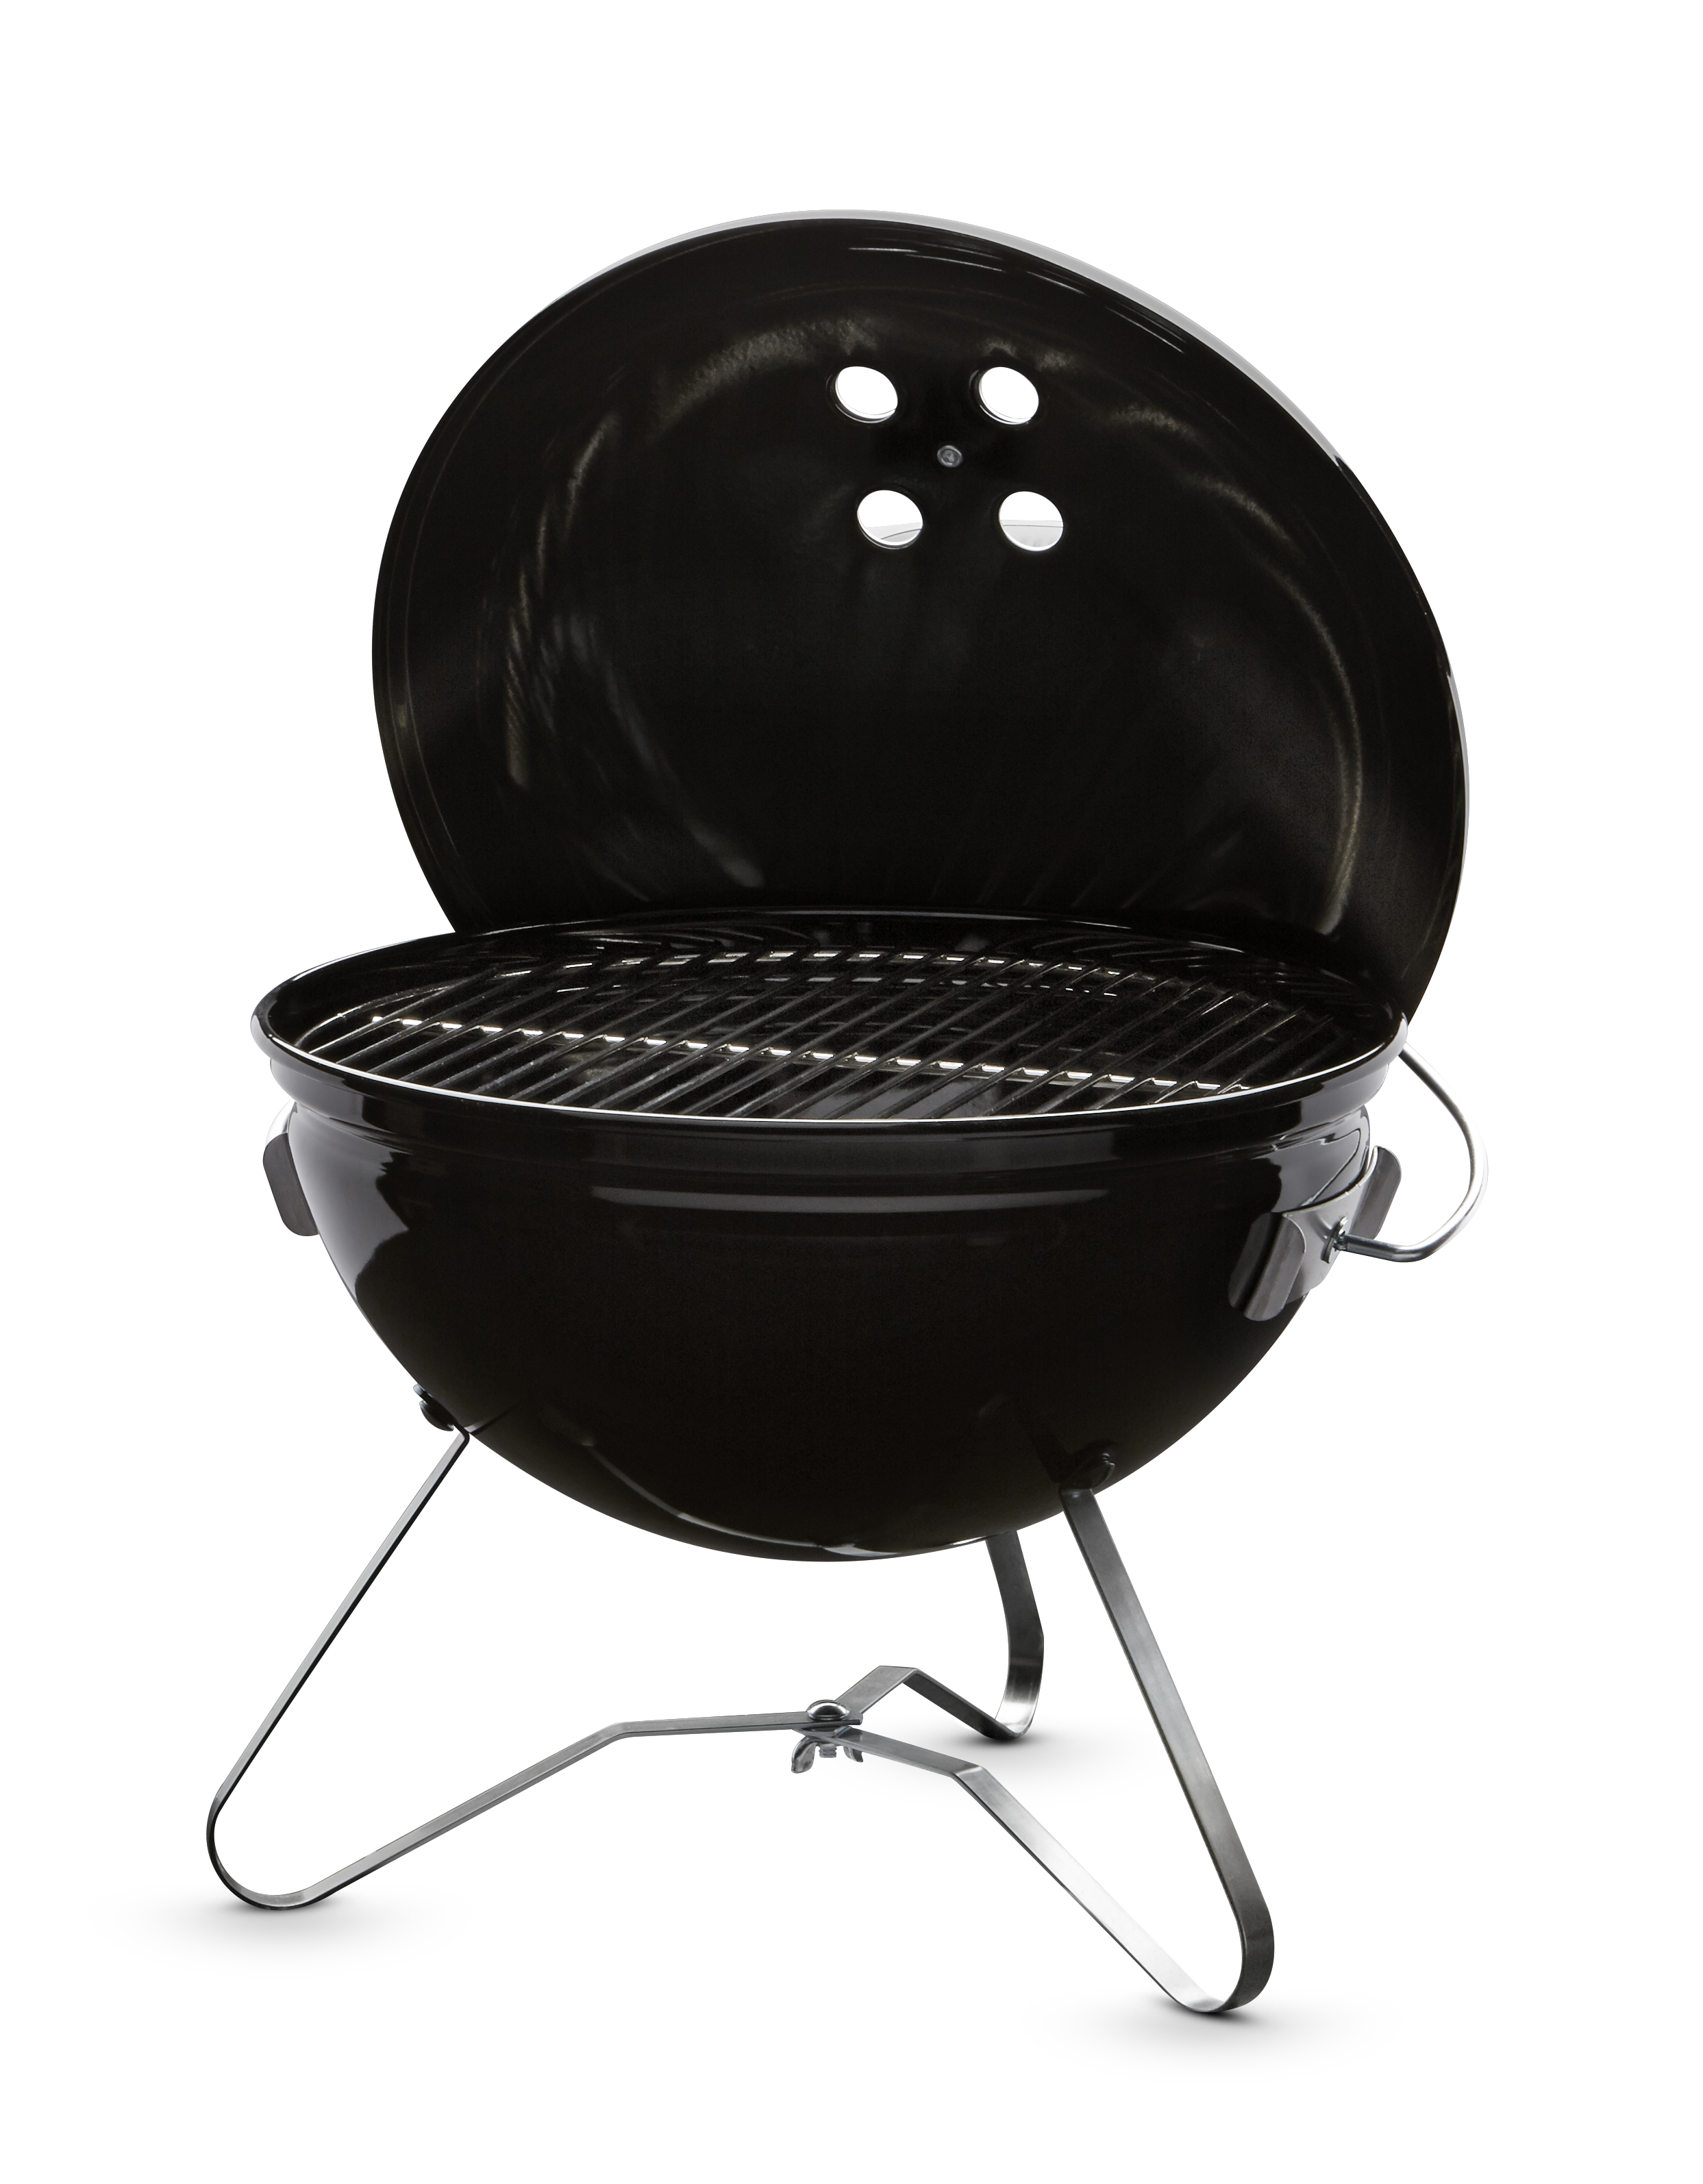 Weber Smokey Joe Premium Charcoal Grill - image 2 of 12